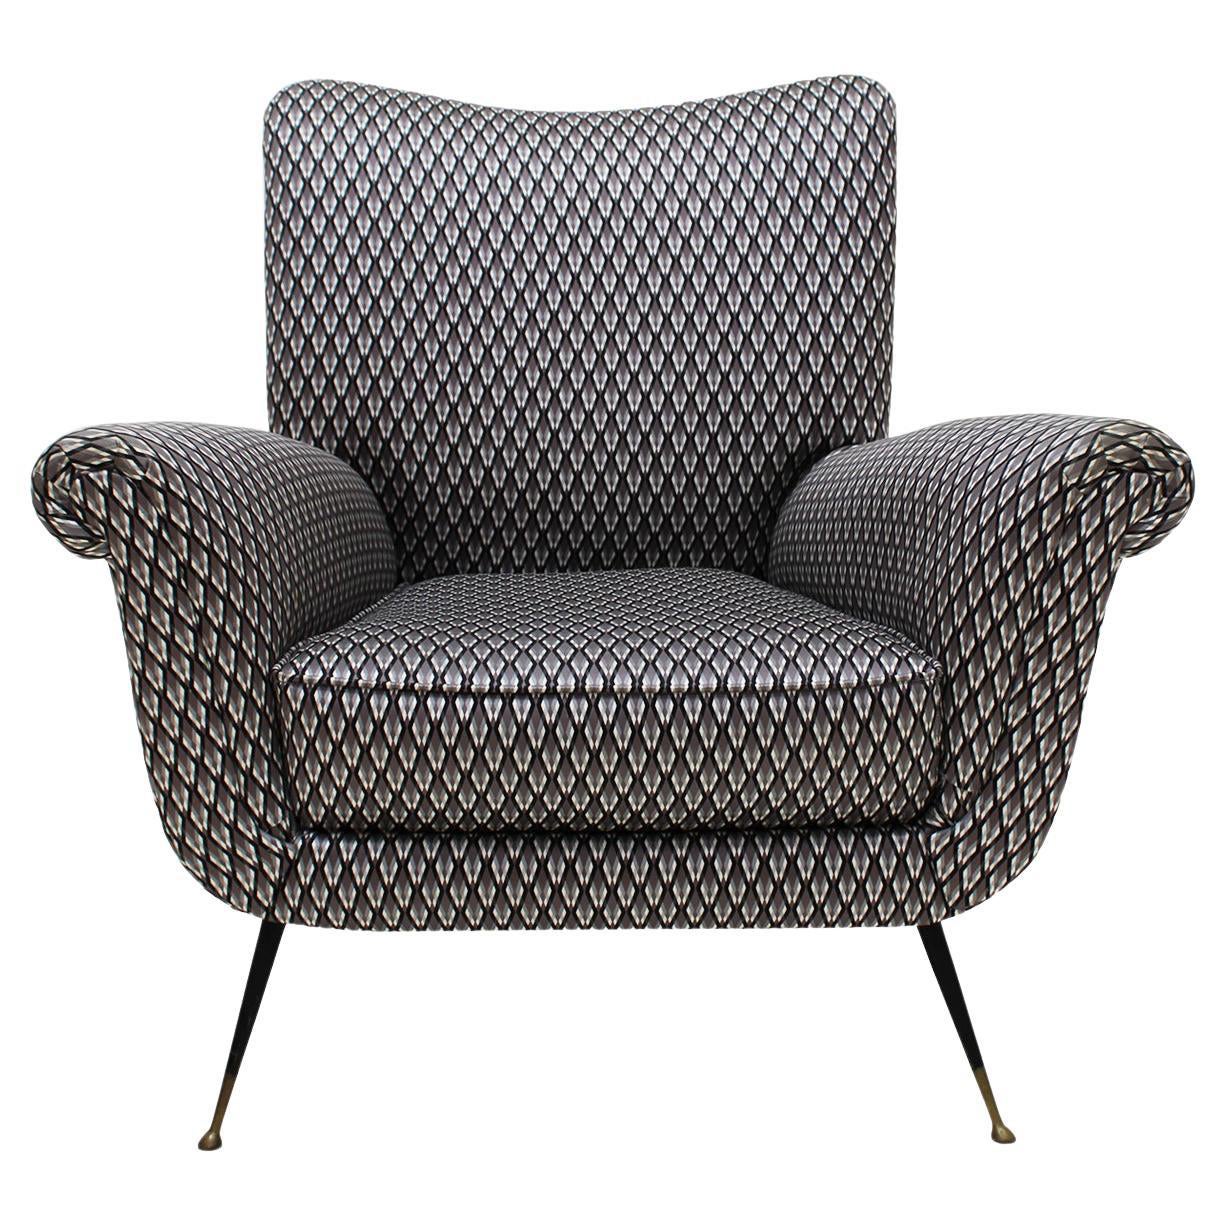 Gigi Radice Mid-Century Armchair Upholstered in Serpentino Fabric